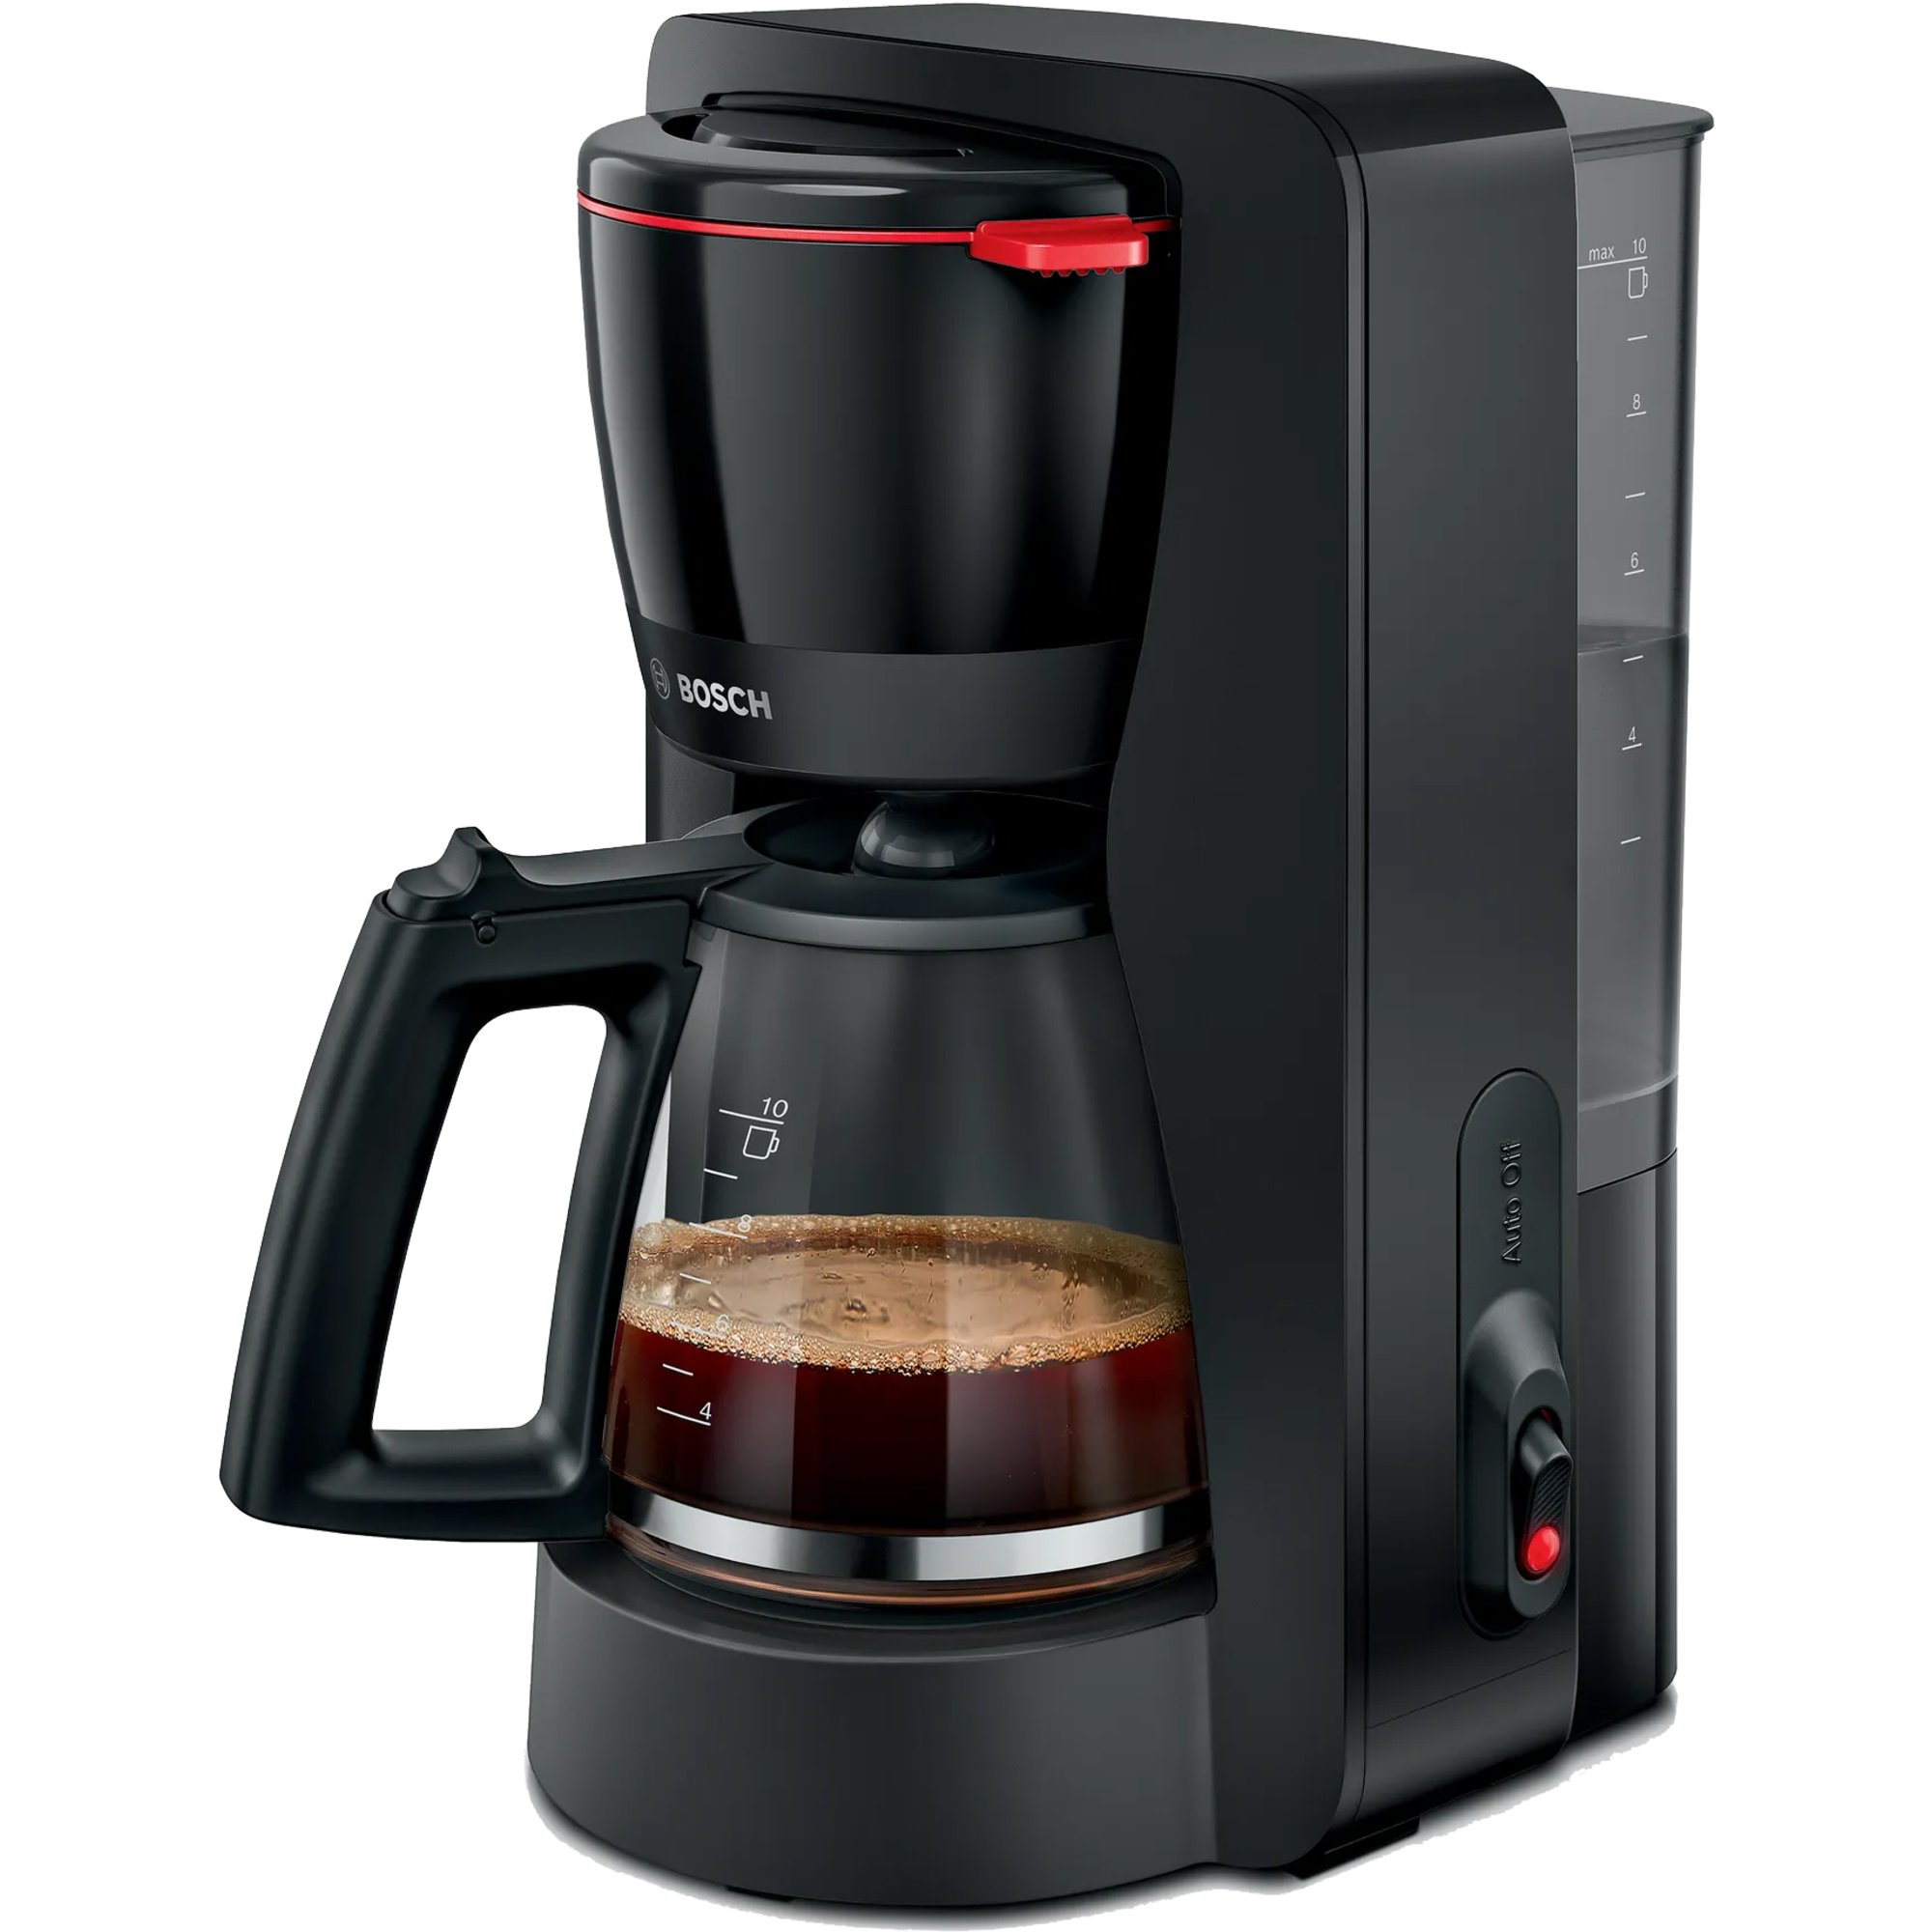 Bosch MyMoment Kaffemaskine med glaskande, sort